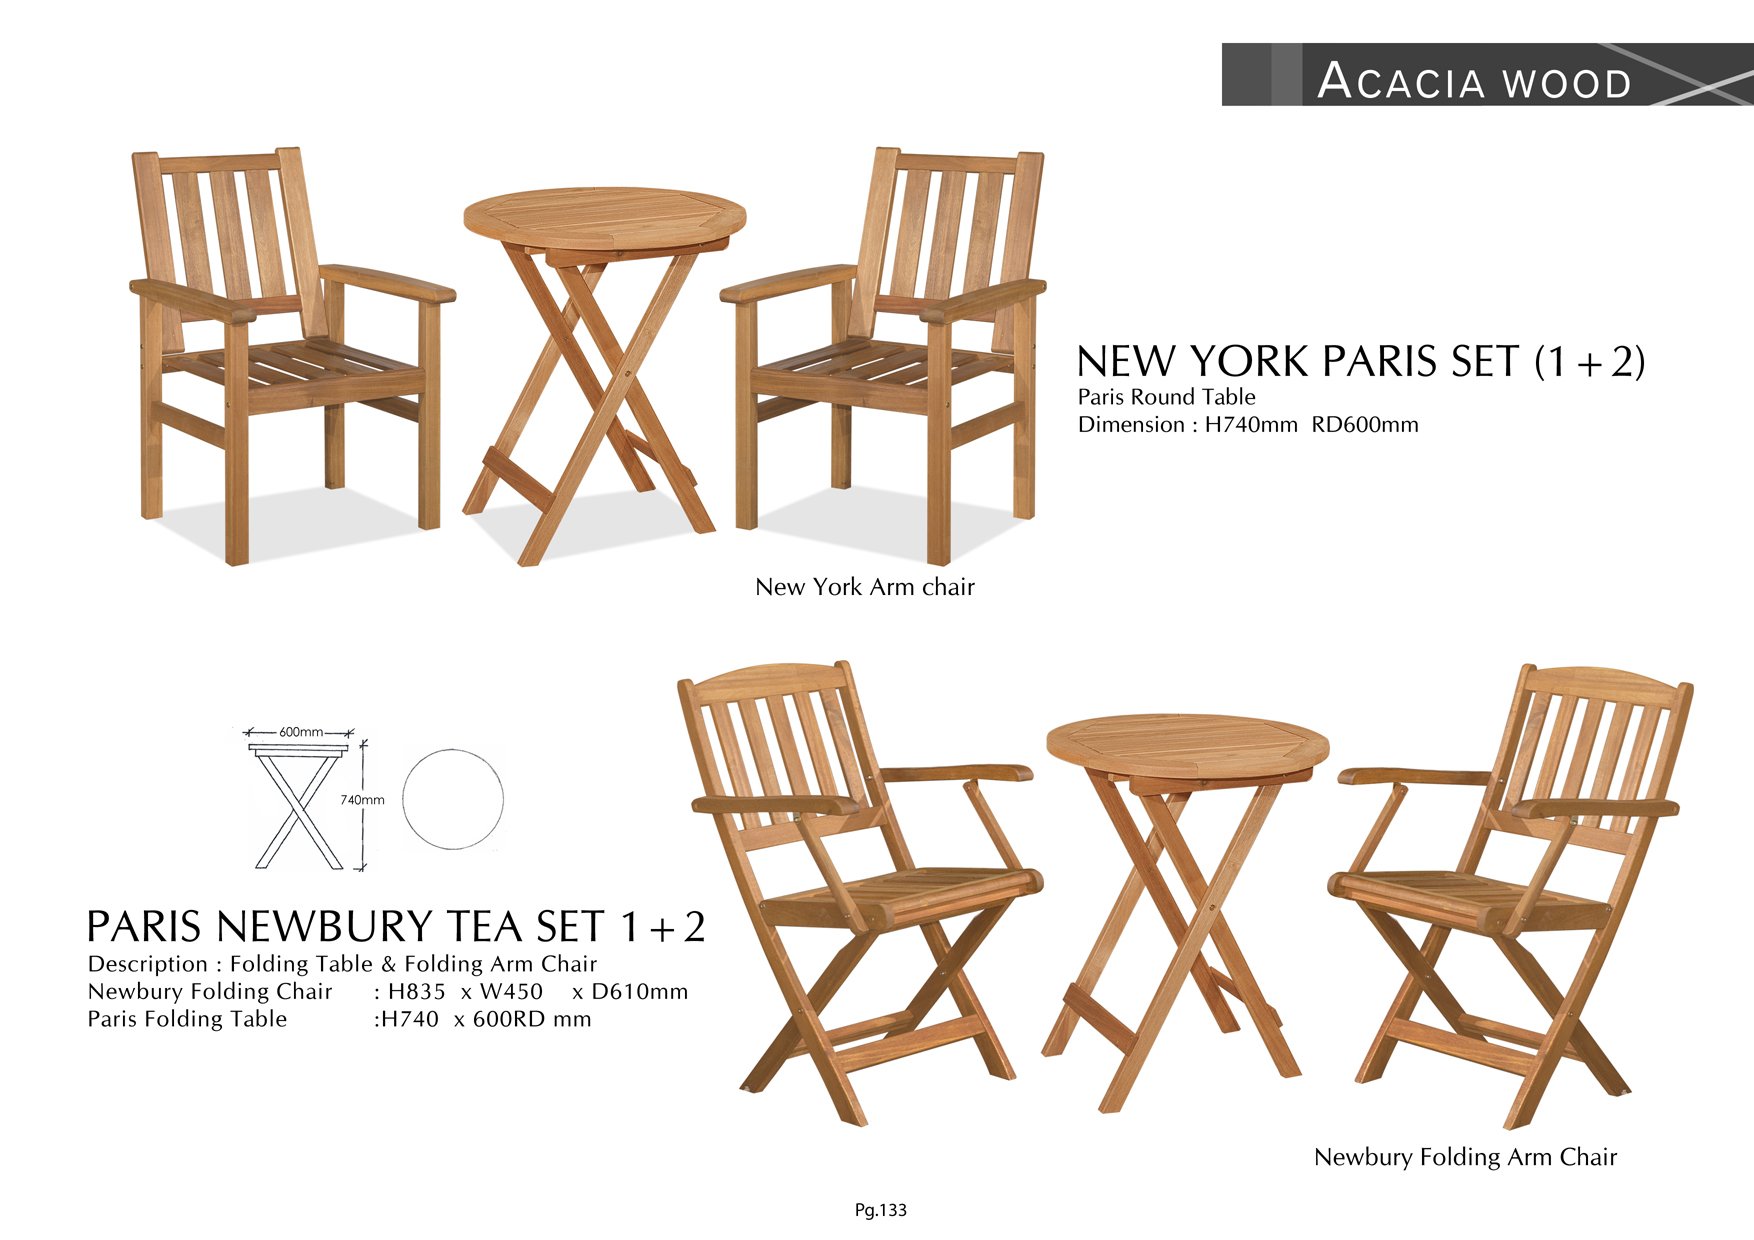 Product: PG133. NEW YORK & PARIS NEWBURY TEA SET